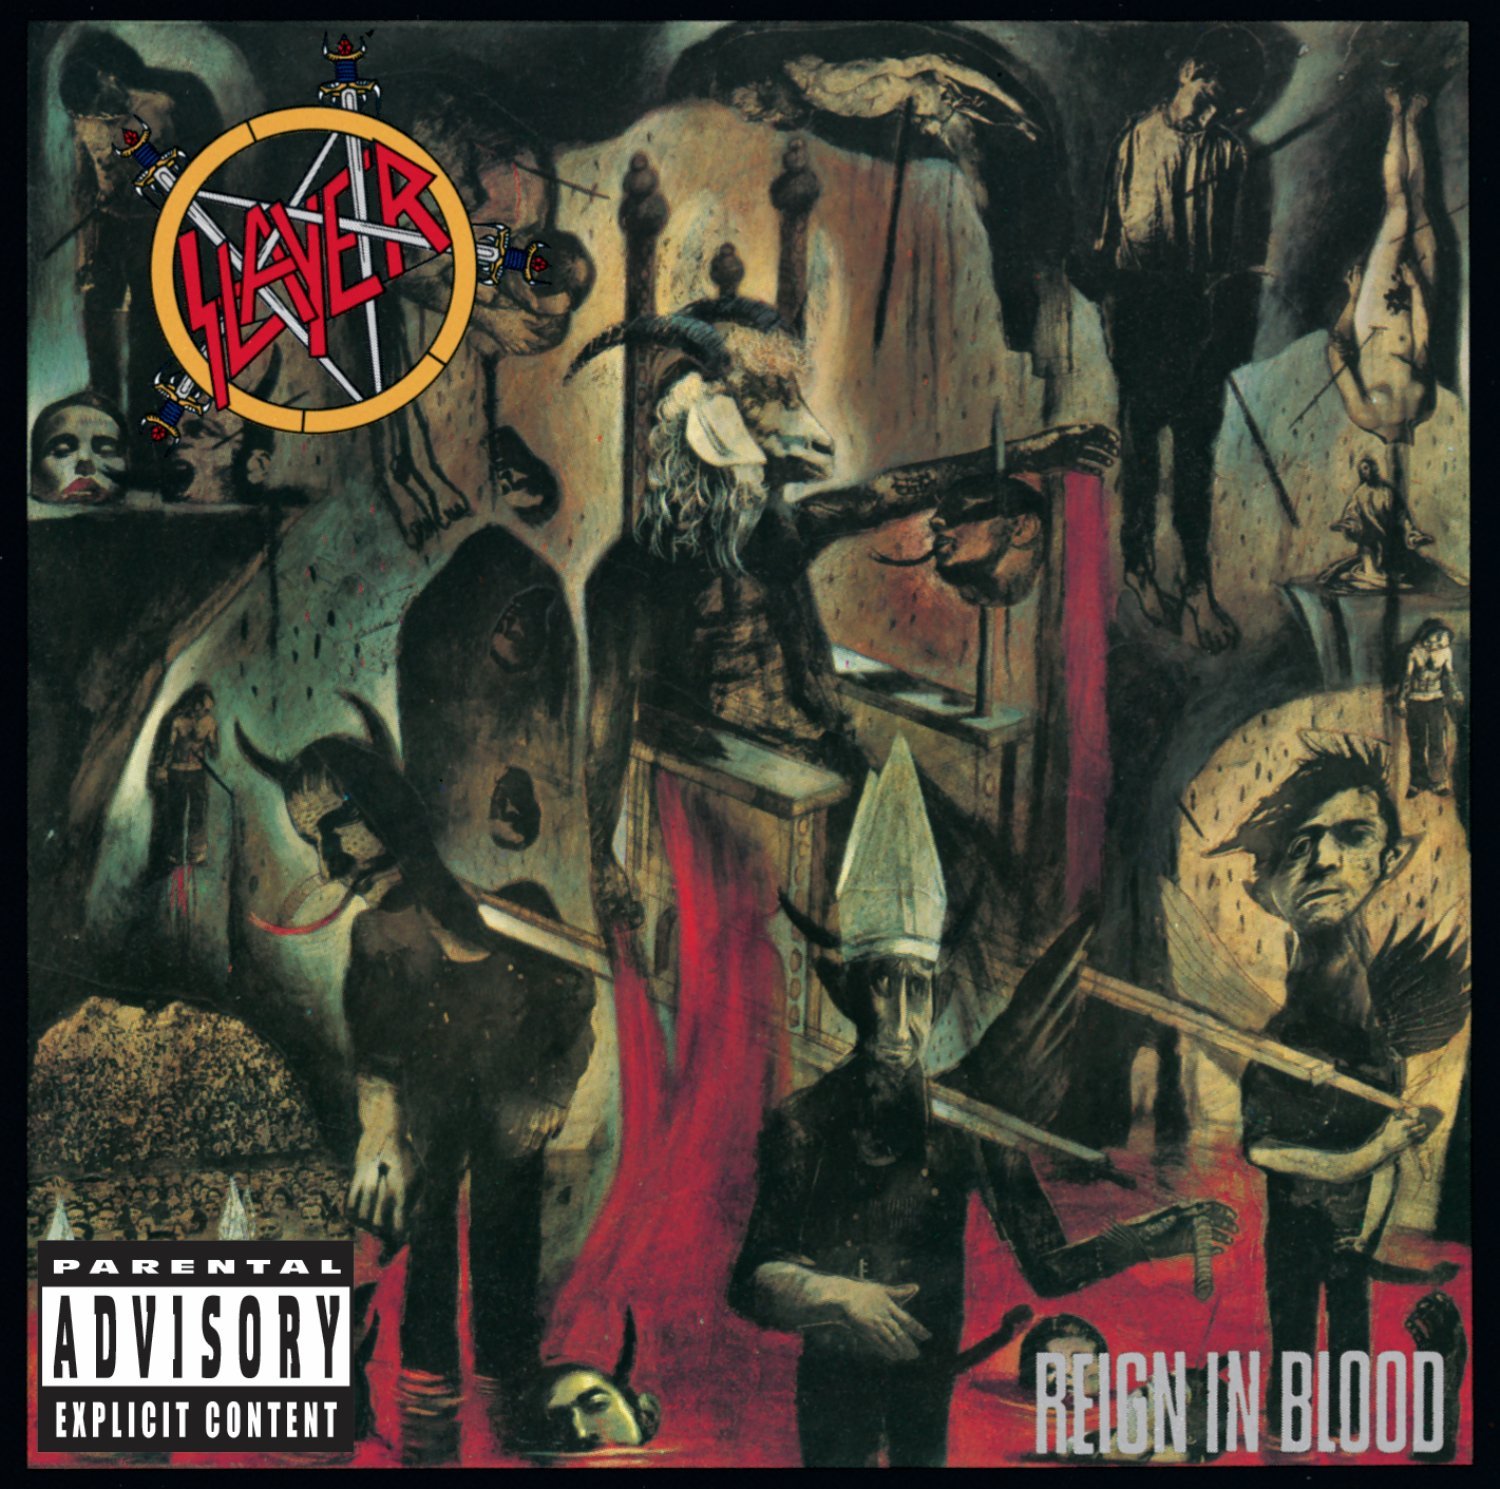 Slayer Reign In Blood (LP)